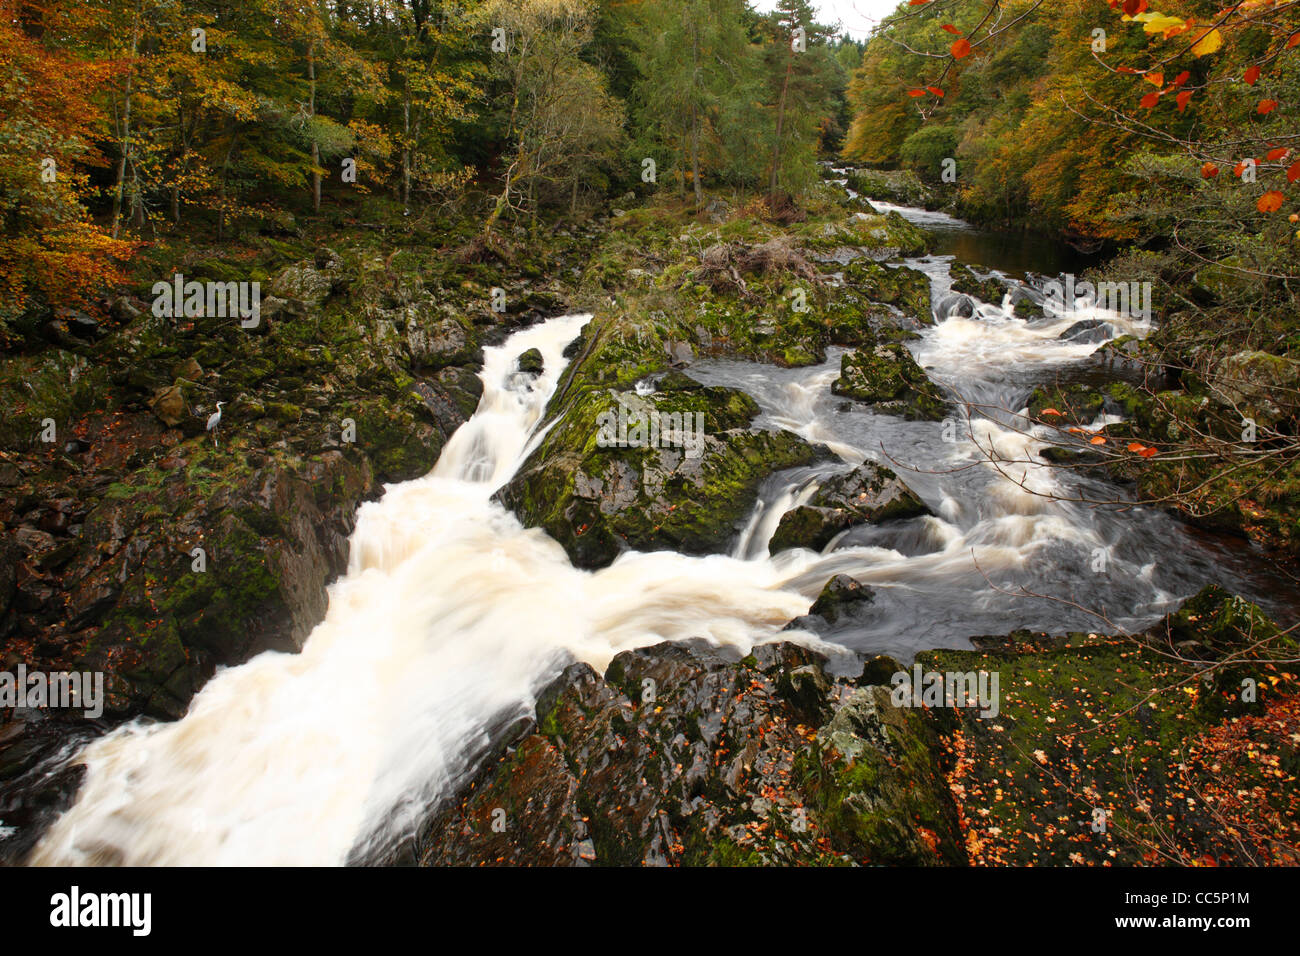 Caídas de Feugh en otoño. Cerca de Banchory, aberdeenshire, Escocia. De octubre. Foto de stock